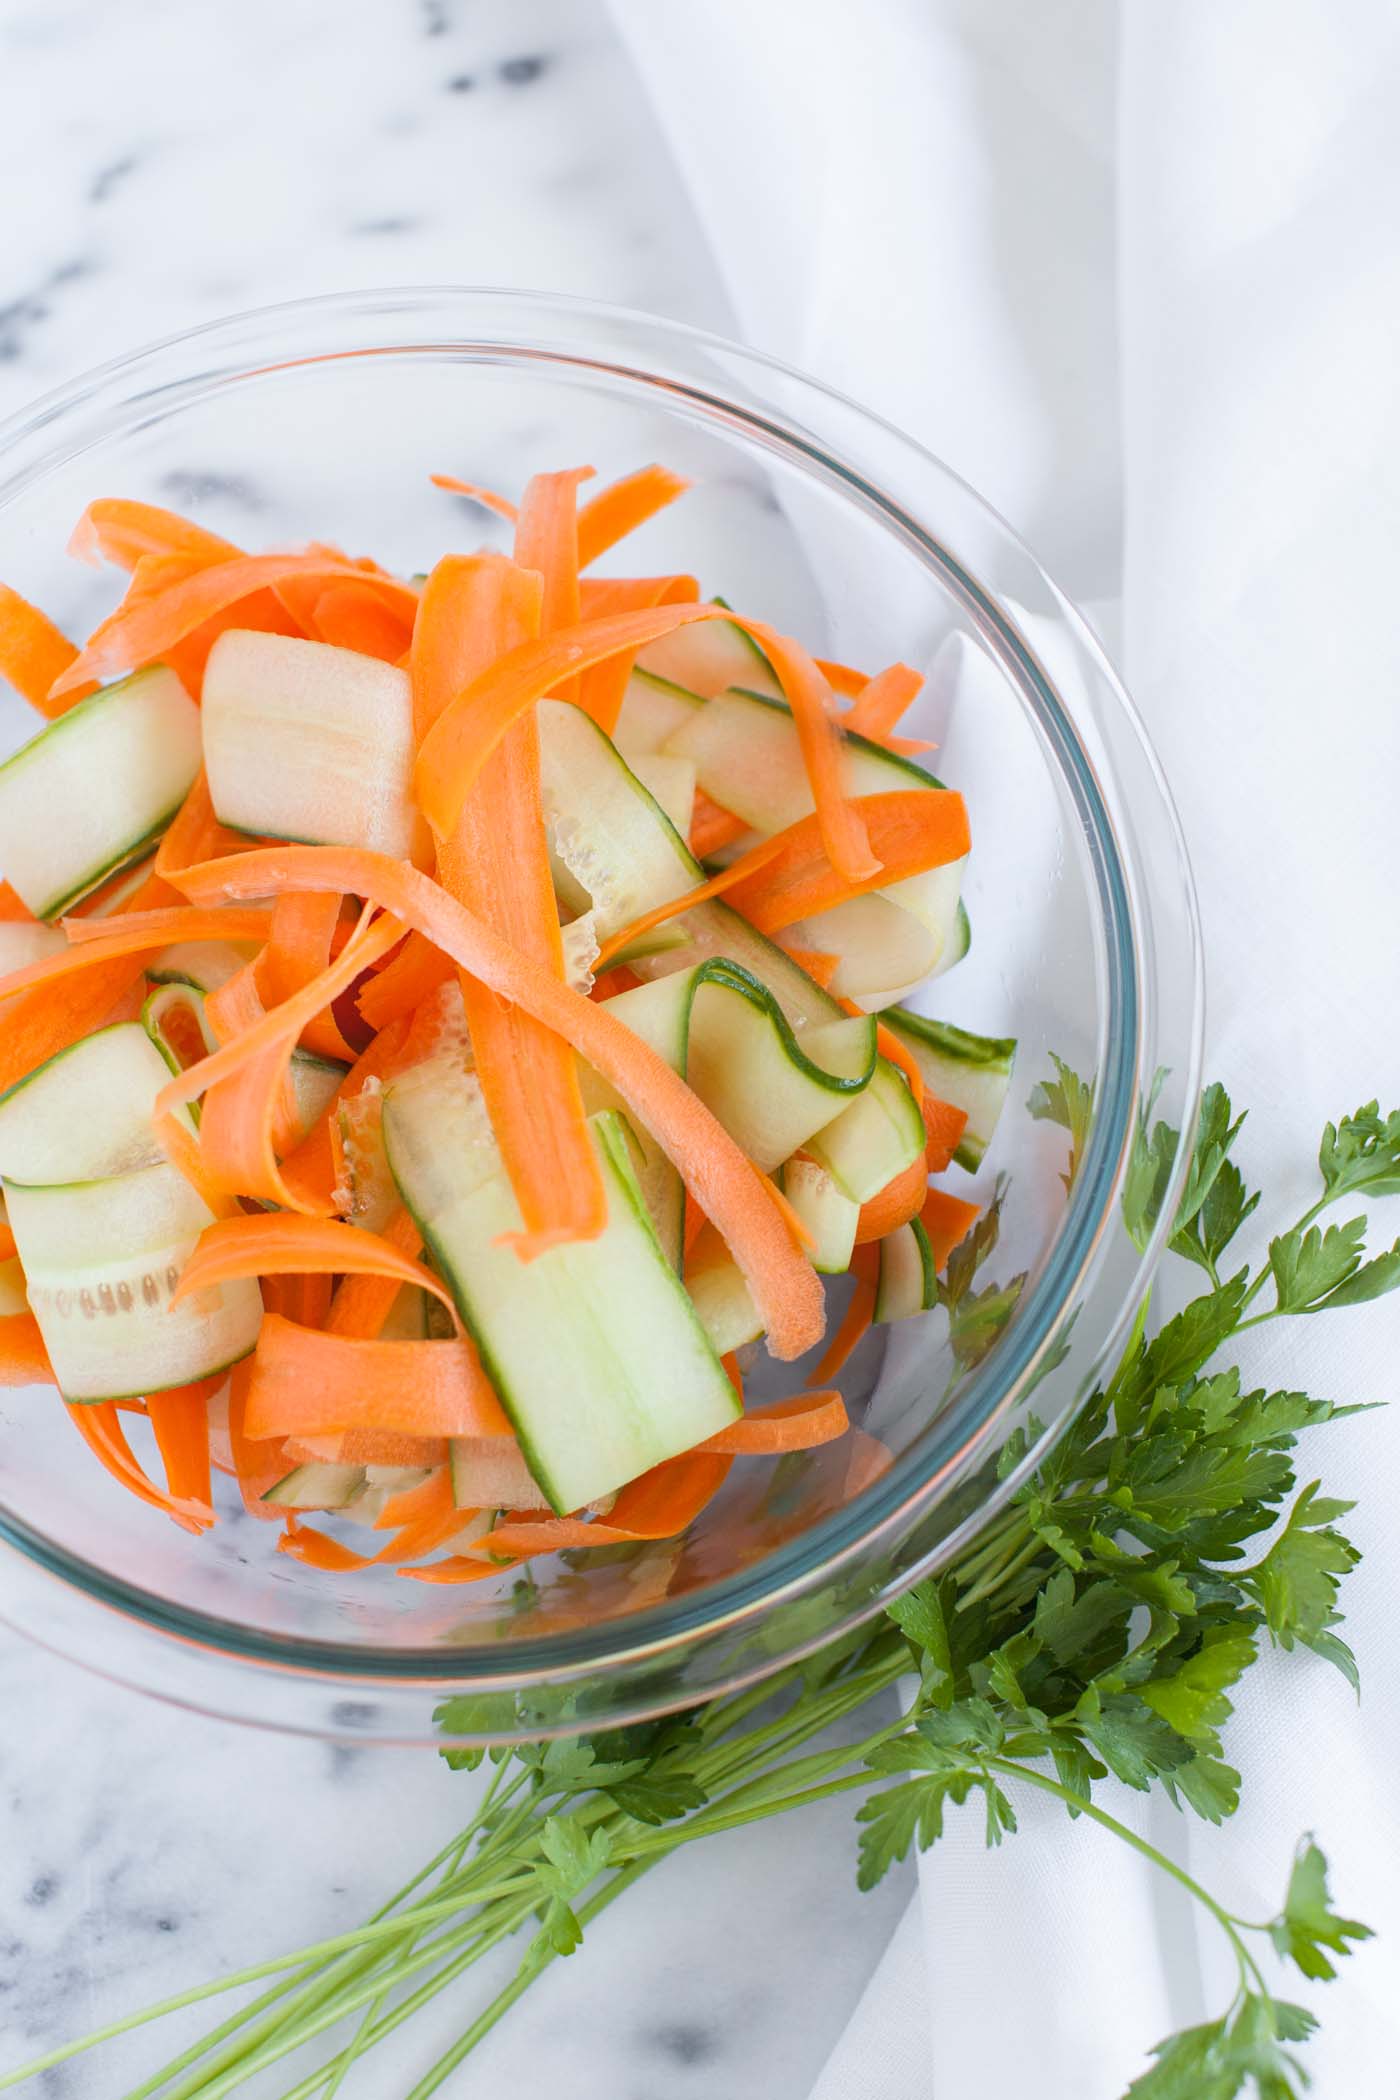 Shredded Carrot & Cucumber Salad